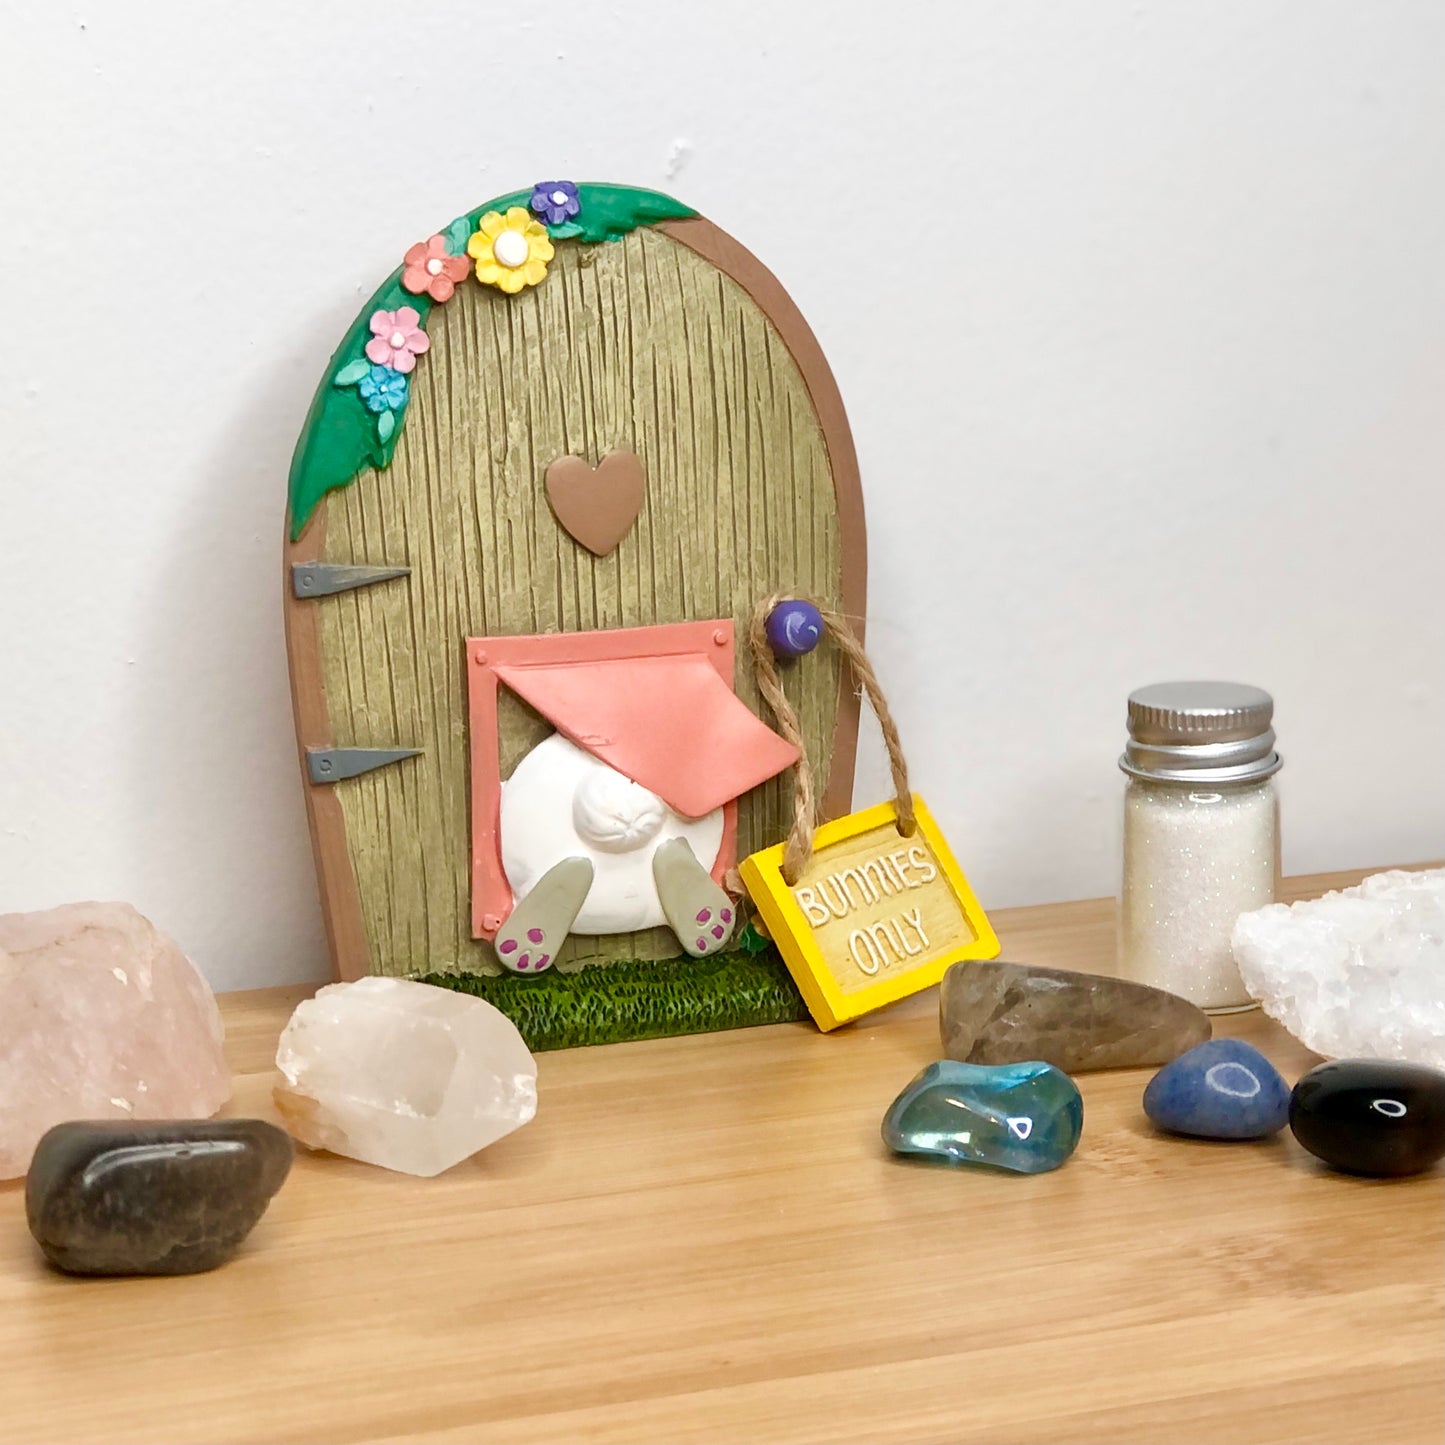 Easter Bunny / Fairy door crystals / tumble stones + roughs treasures kit